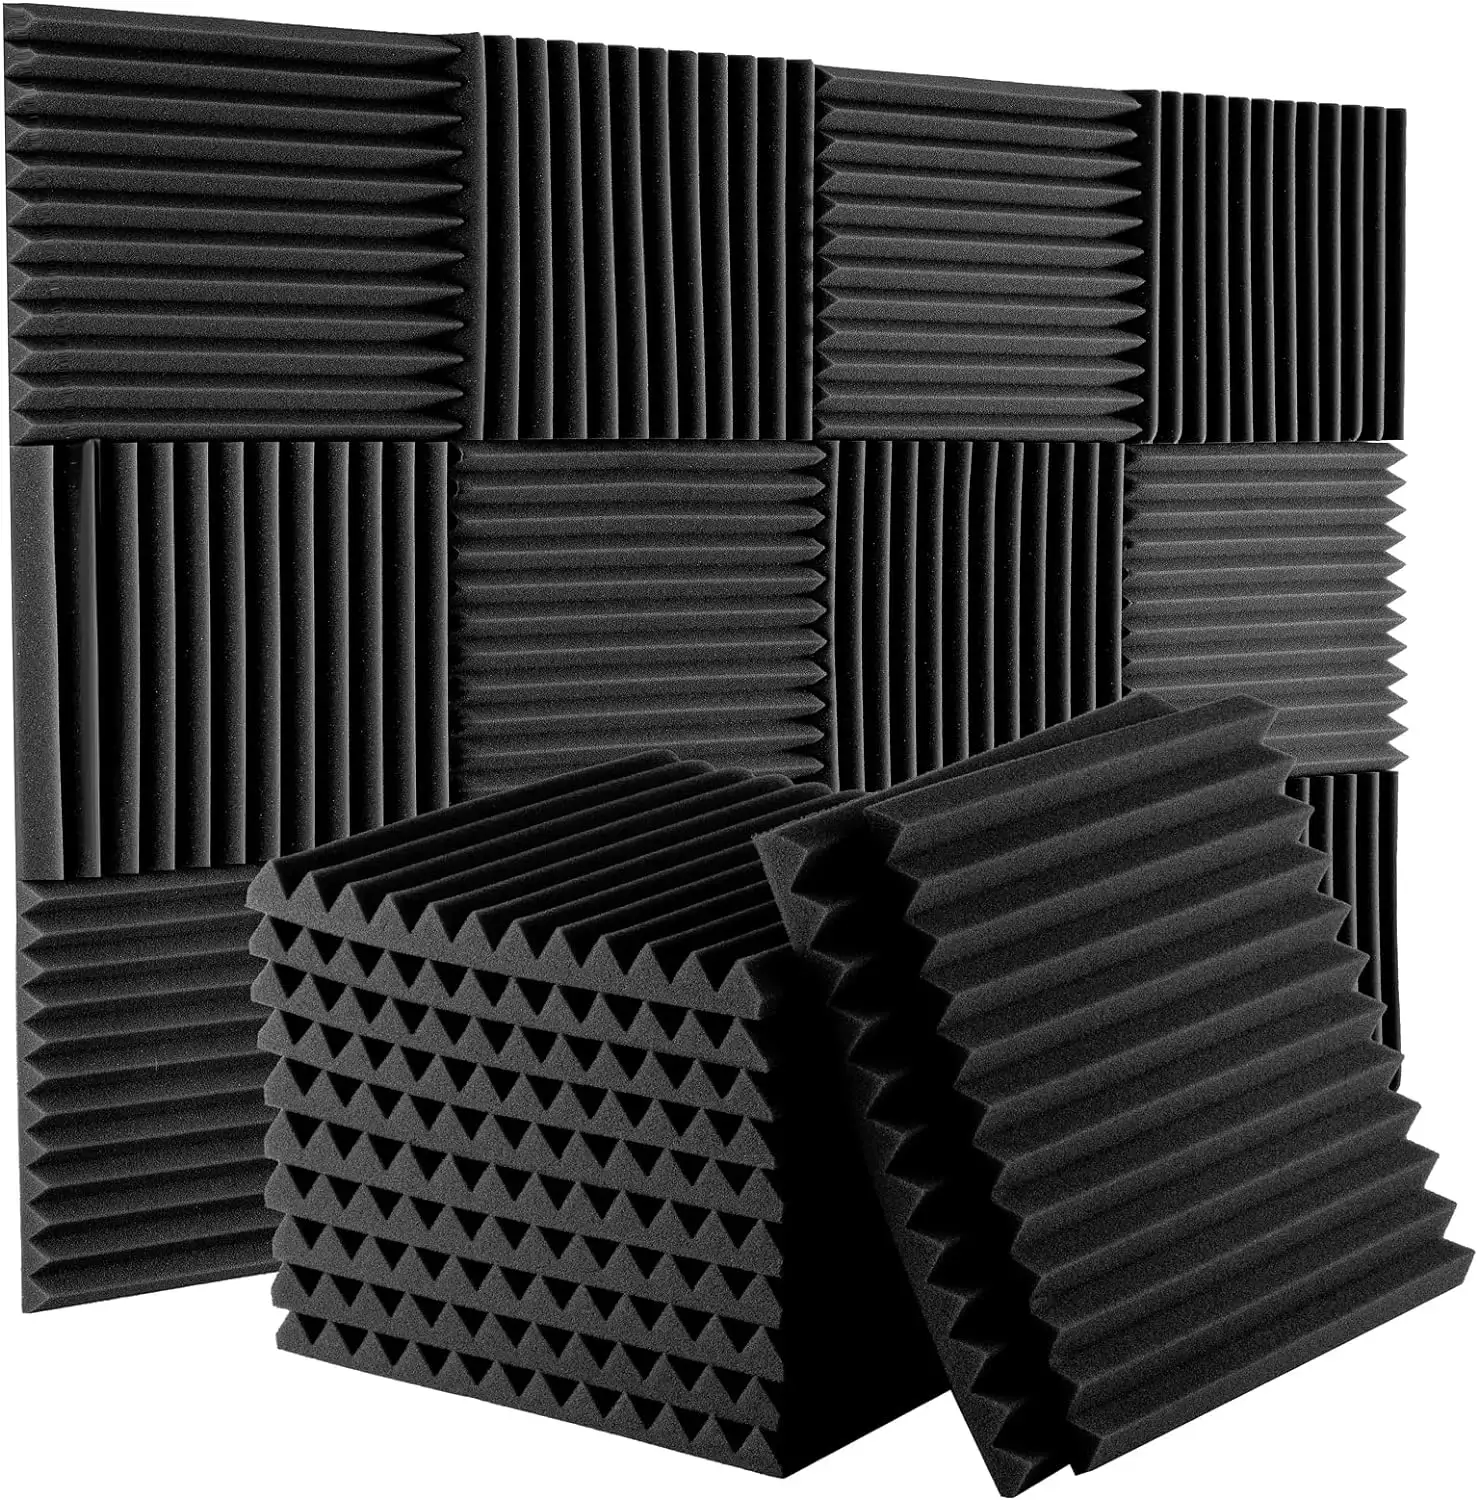 Toptan yüksek yoğunluklu ses köpük akustik kama ses geçirmez dolgu akustik köpük paneller